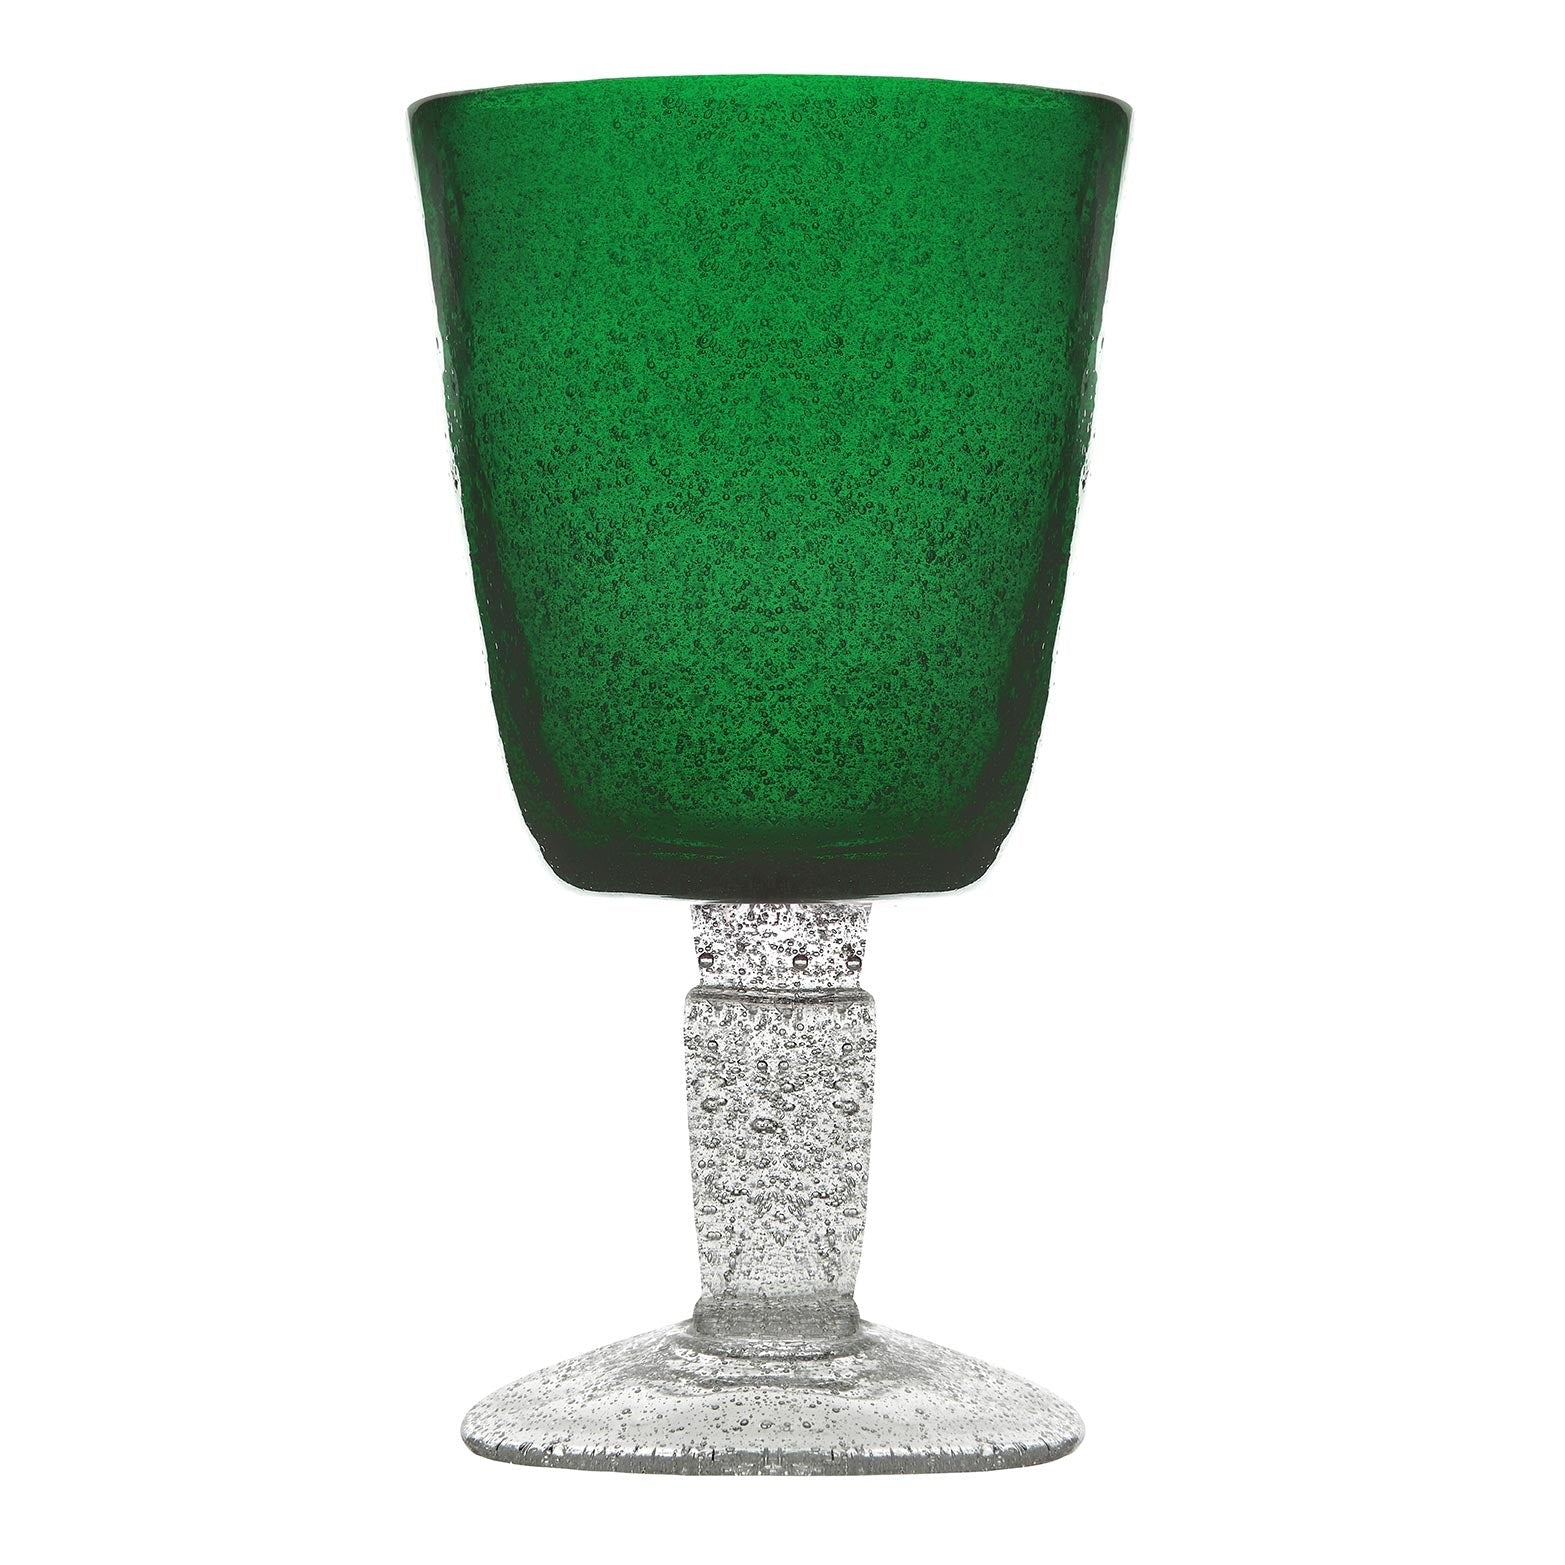 Memento Glassware Wine Goblet in Emerald Green